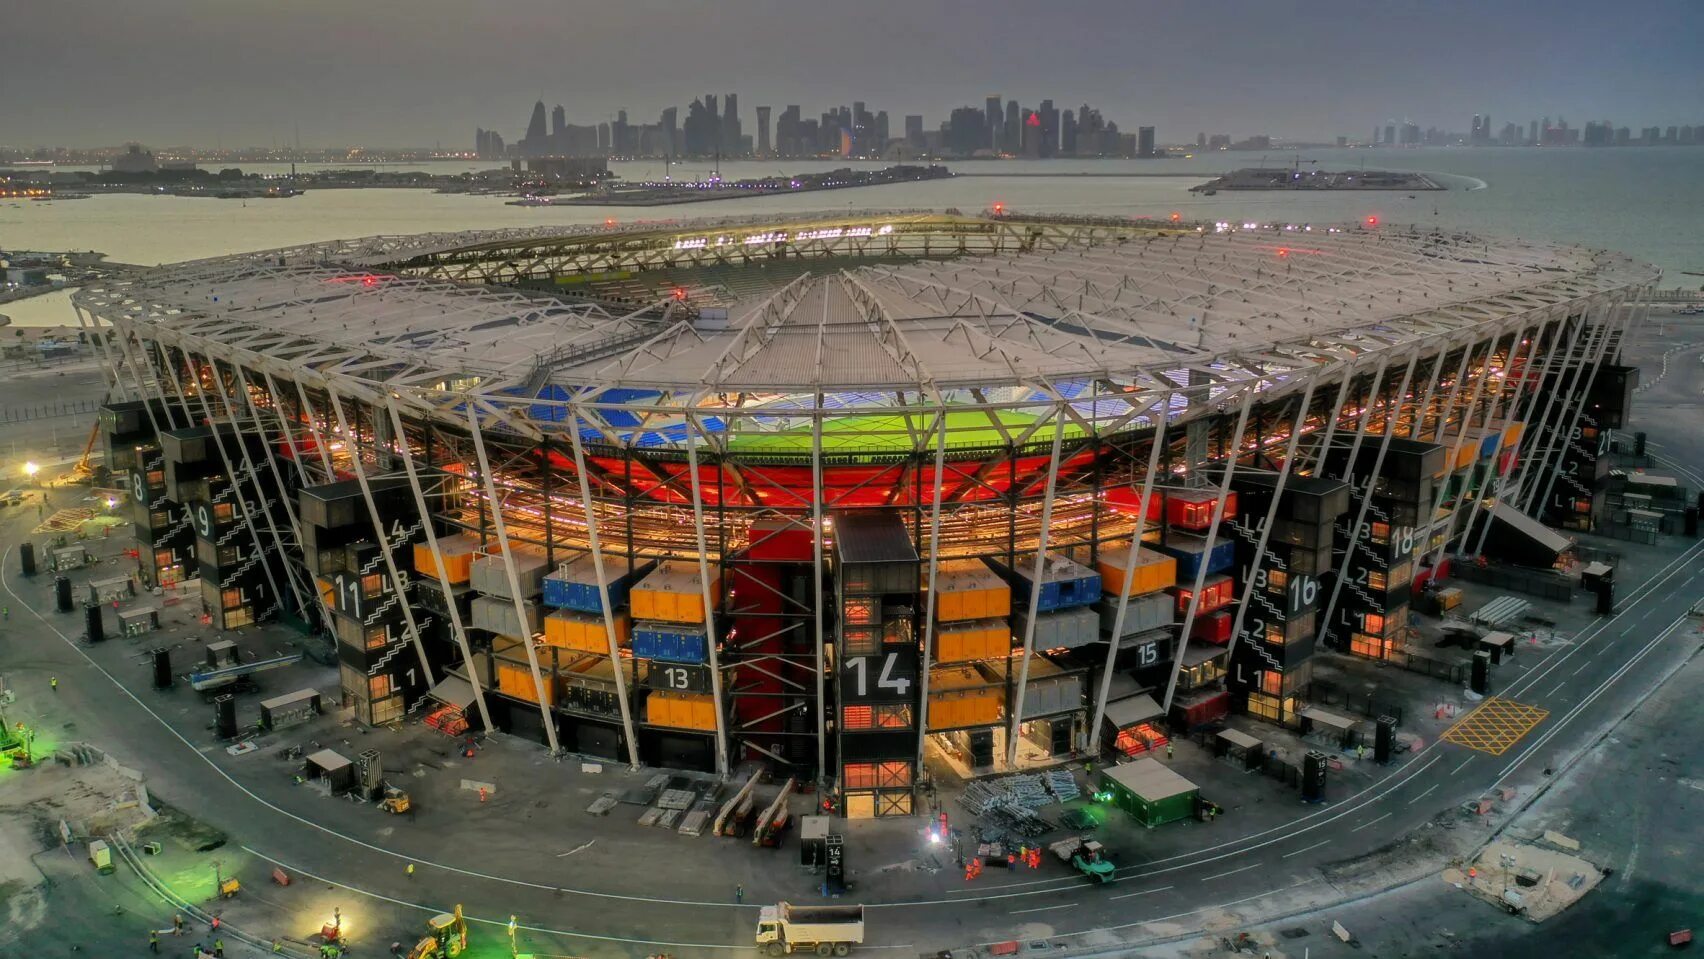 Stadium build. Стадион 974 Катар. Стадион из контейнеров в Катаре. Рас Абу Абуд стадион. Стадион в Катаре 2022 из контейнеров.